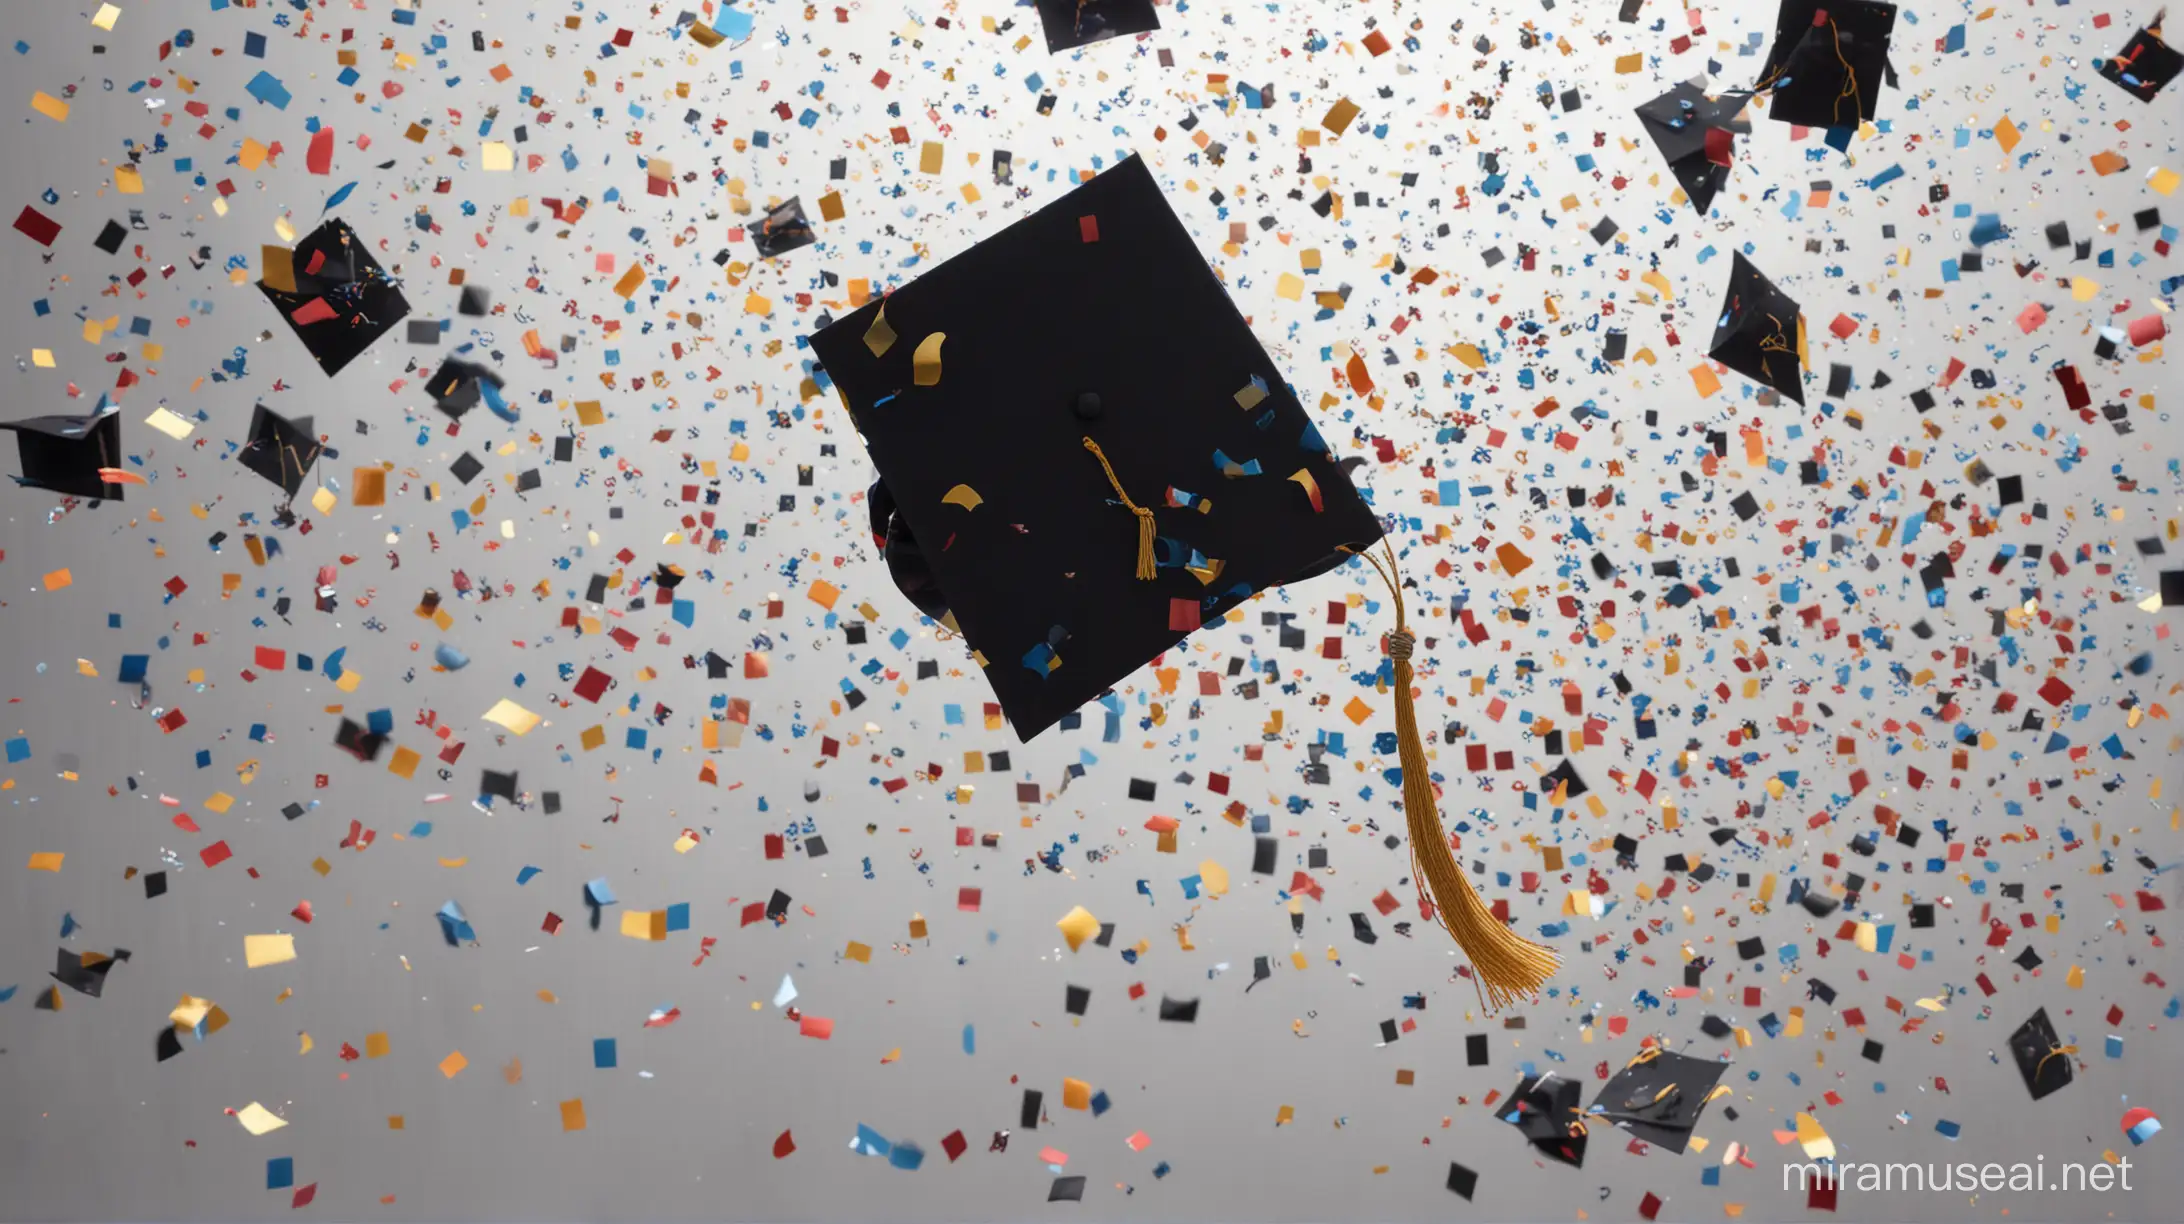 a graduation cap flies in the air with confetti